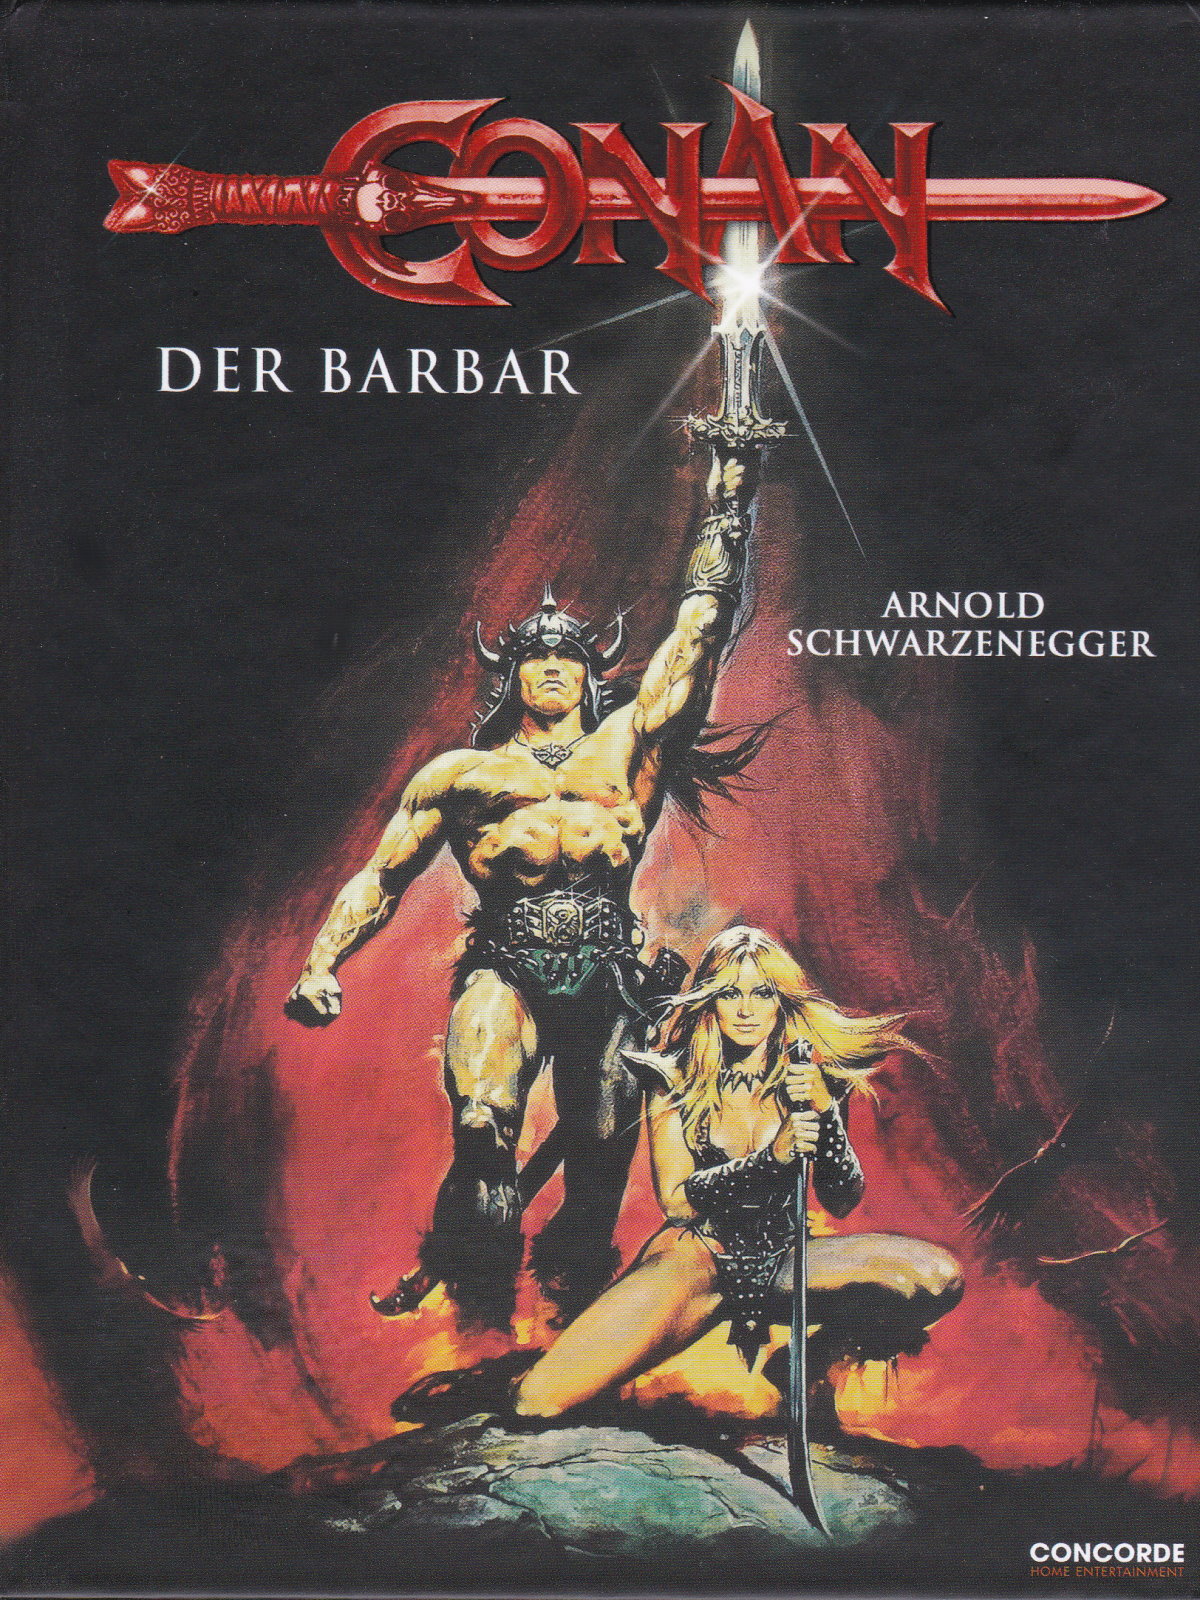 Cover - Conan - Der Barbar.jpg